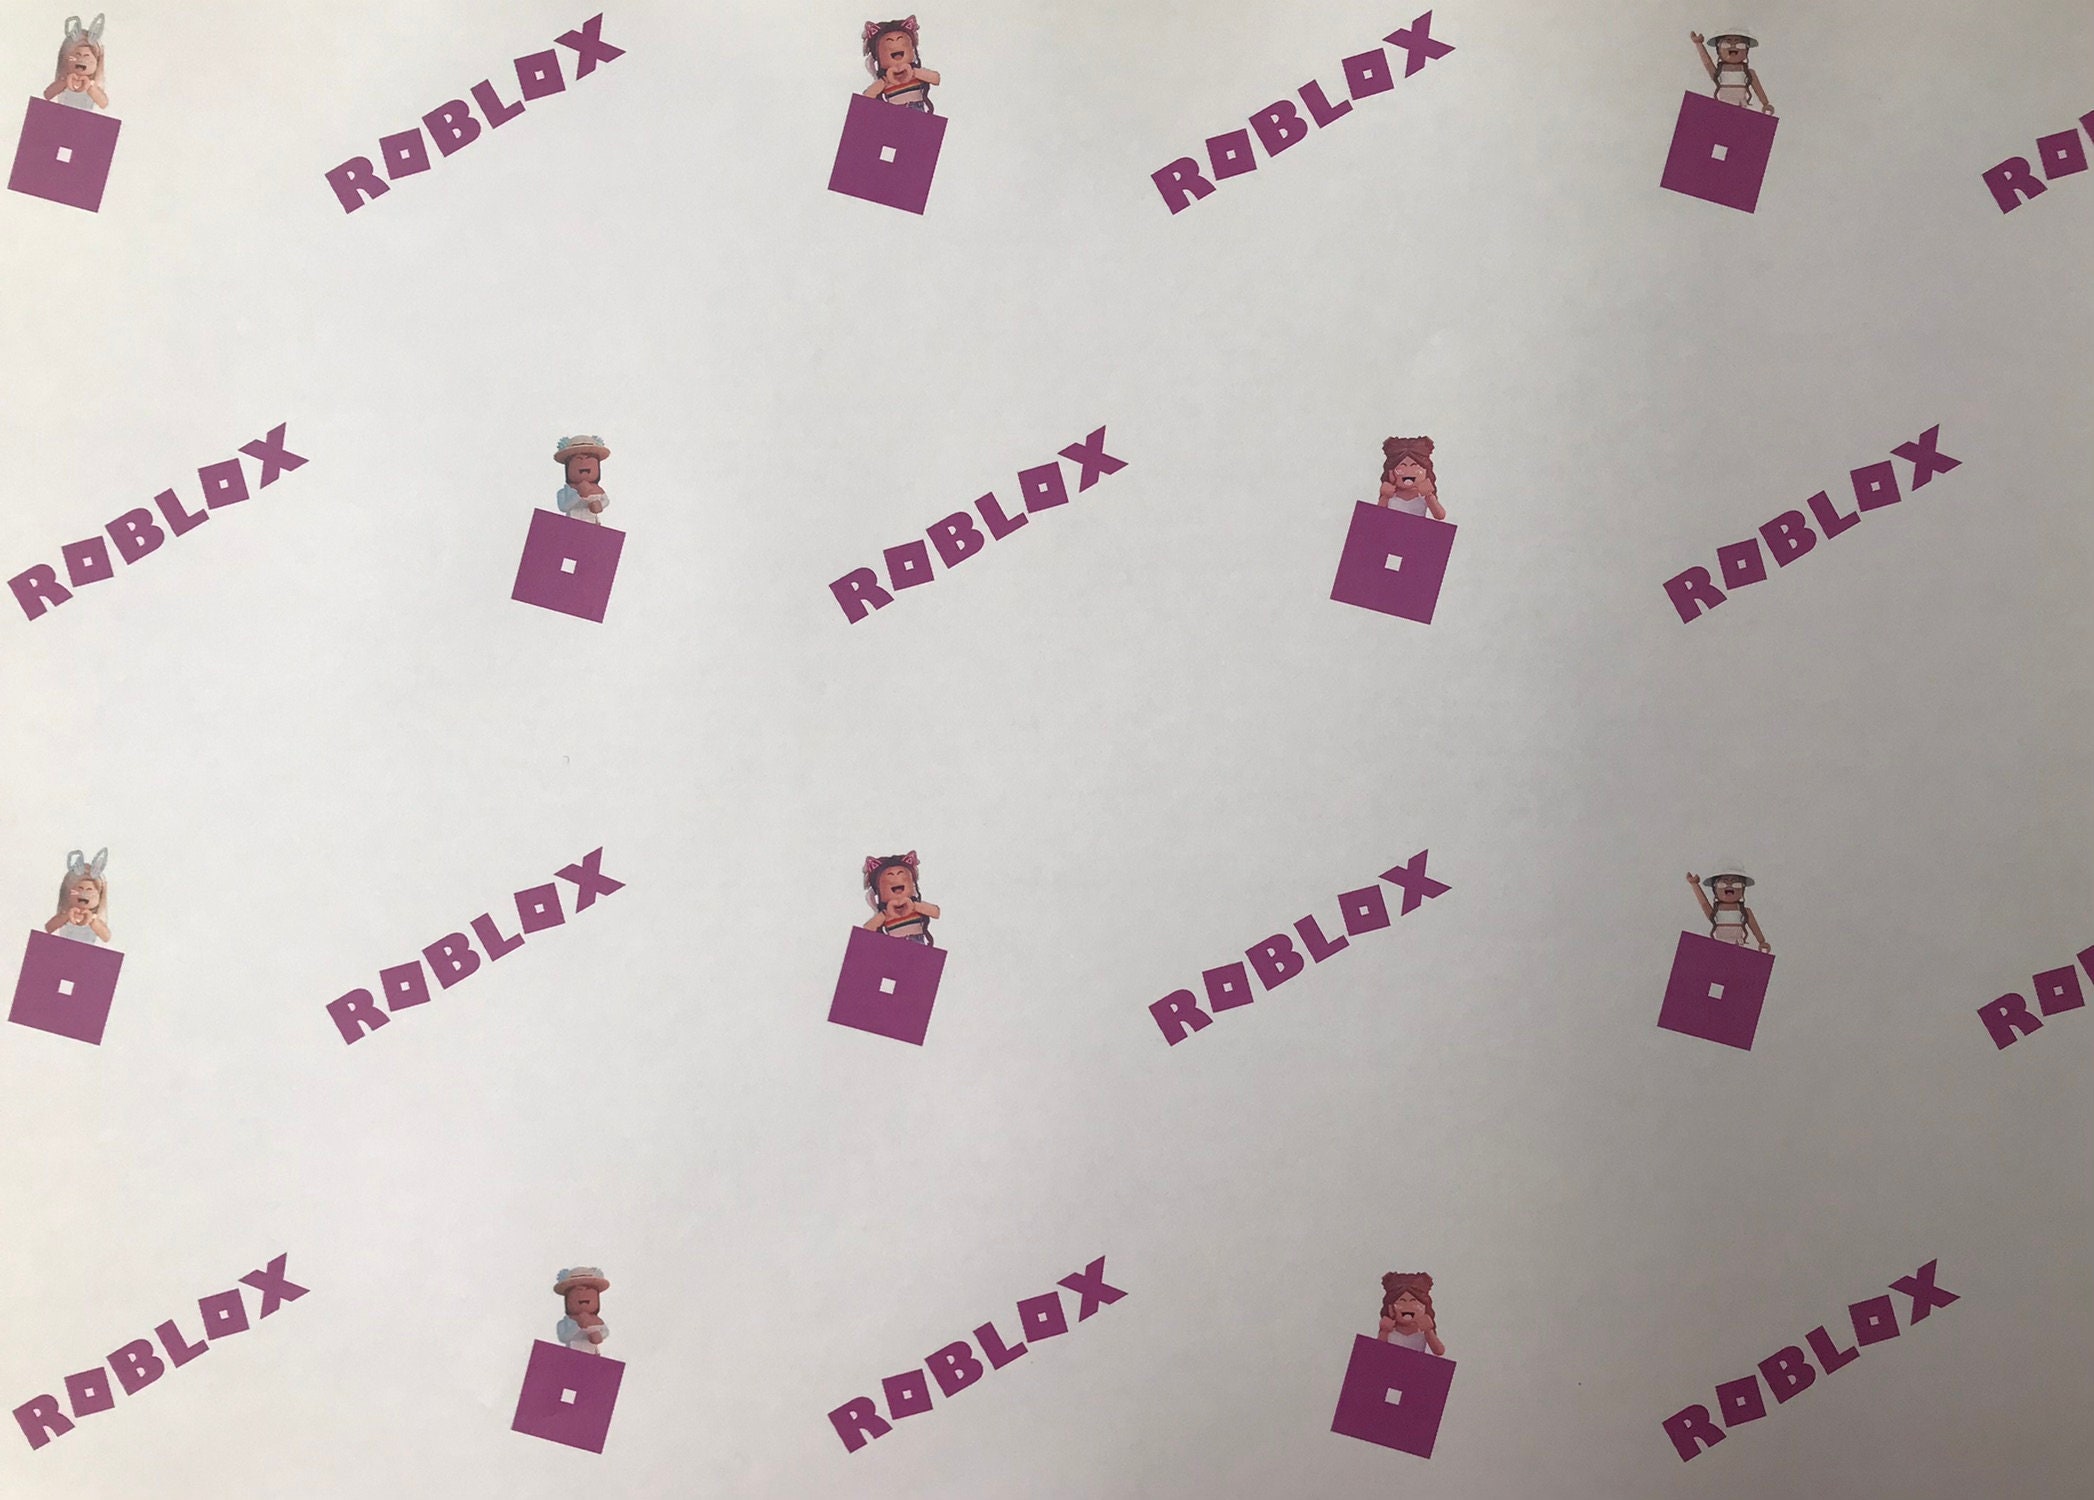 Roblox Gift Card DKK - Denmark